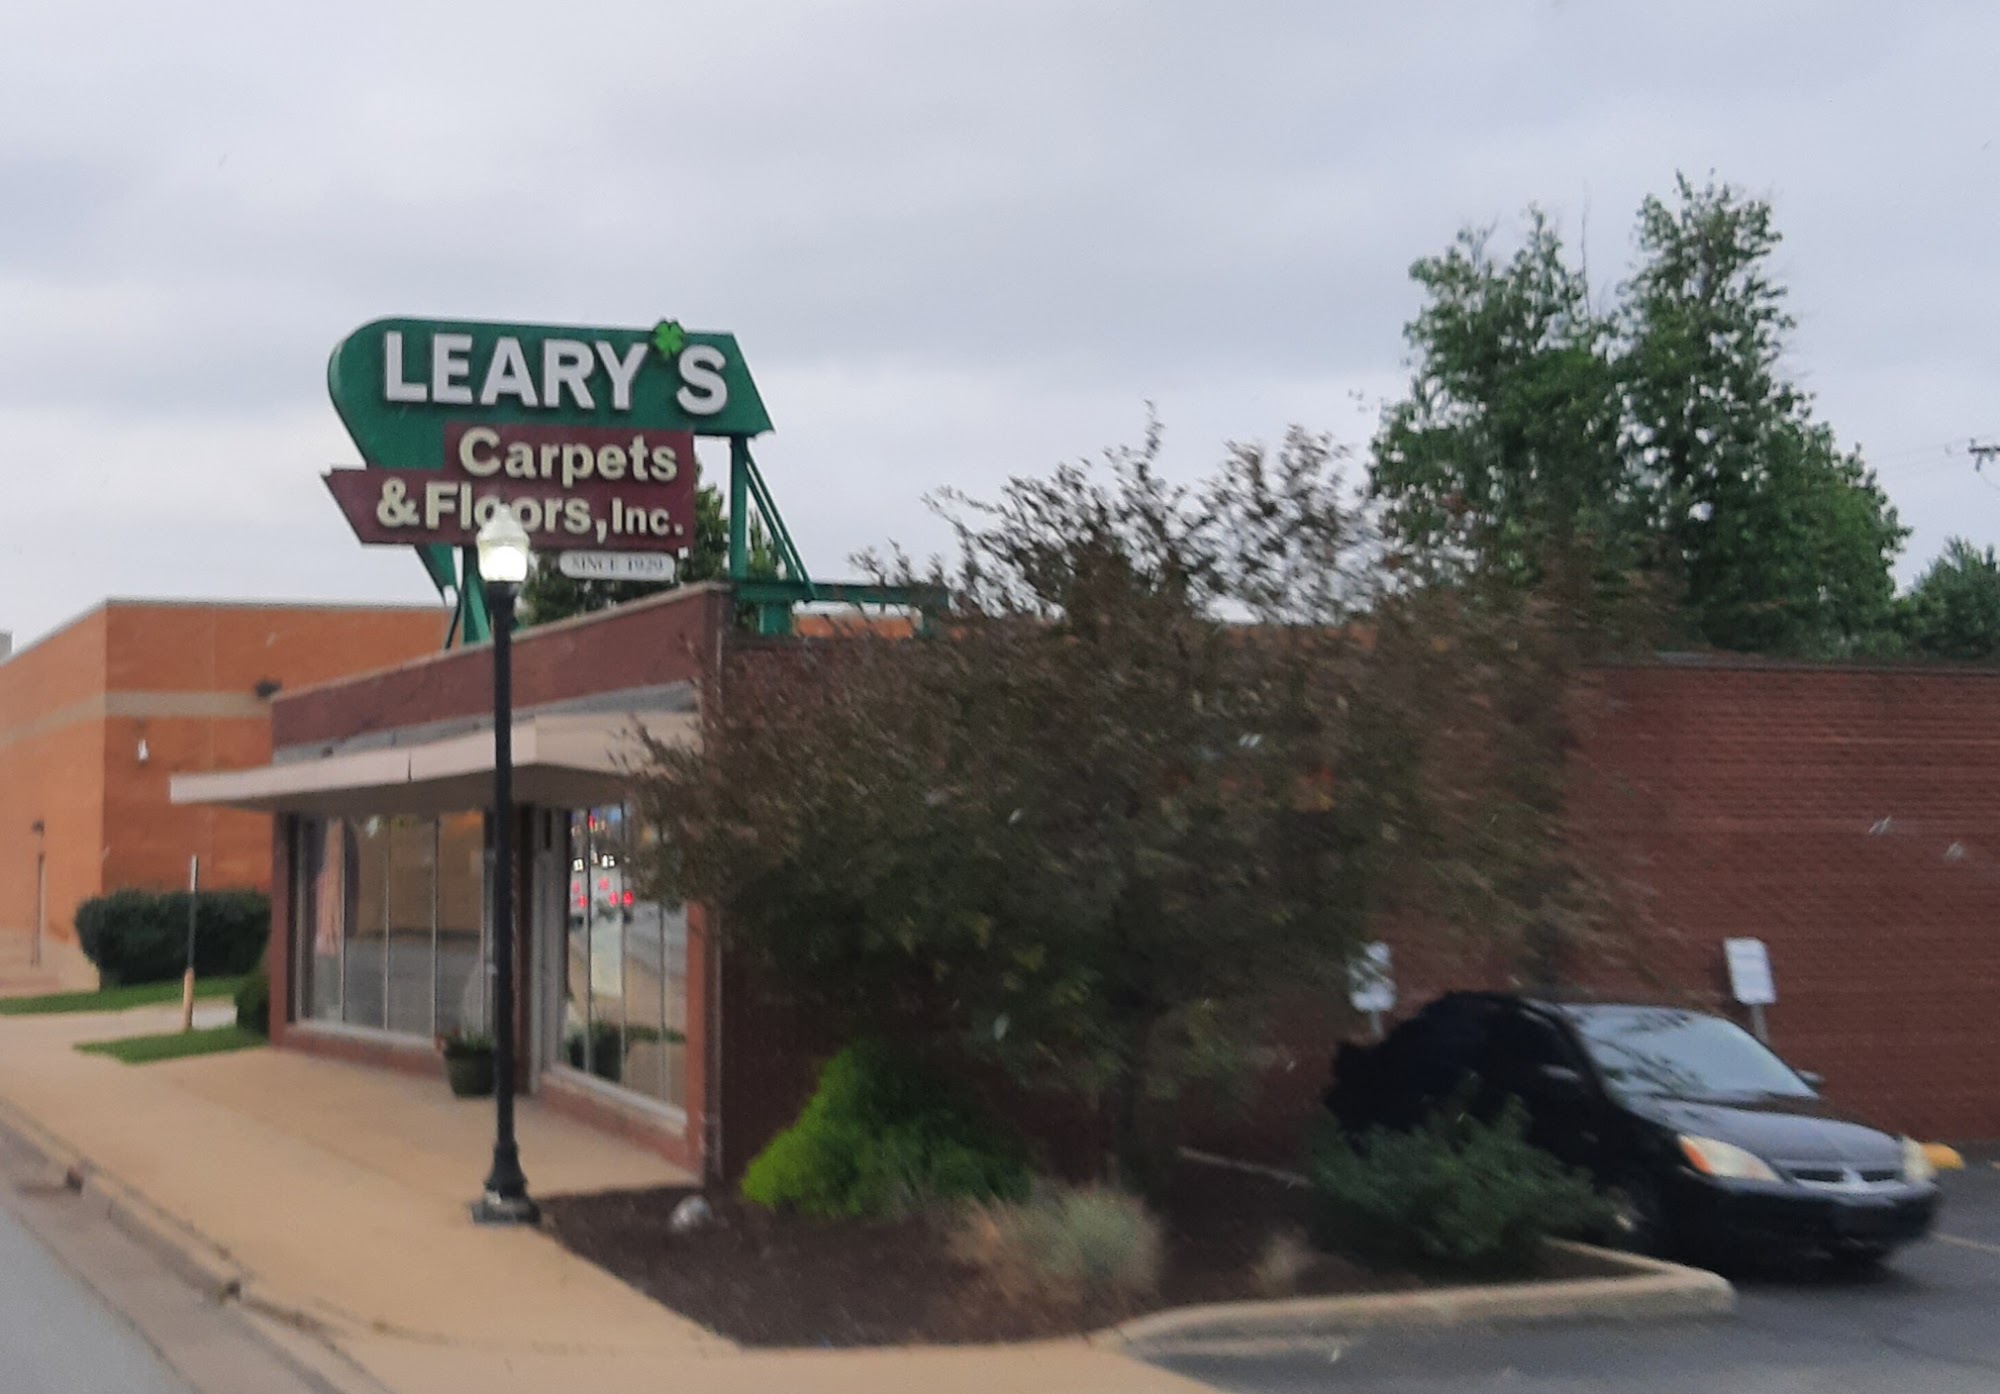 Learys Carpets & Floors, Inc.